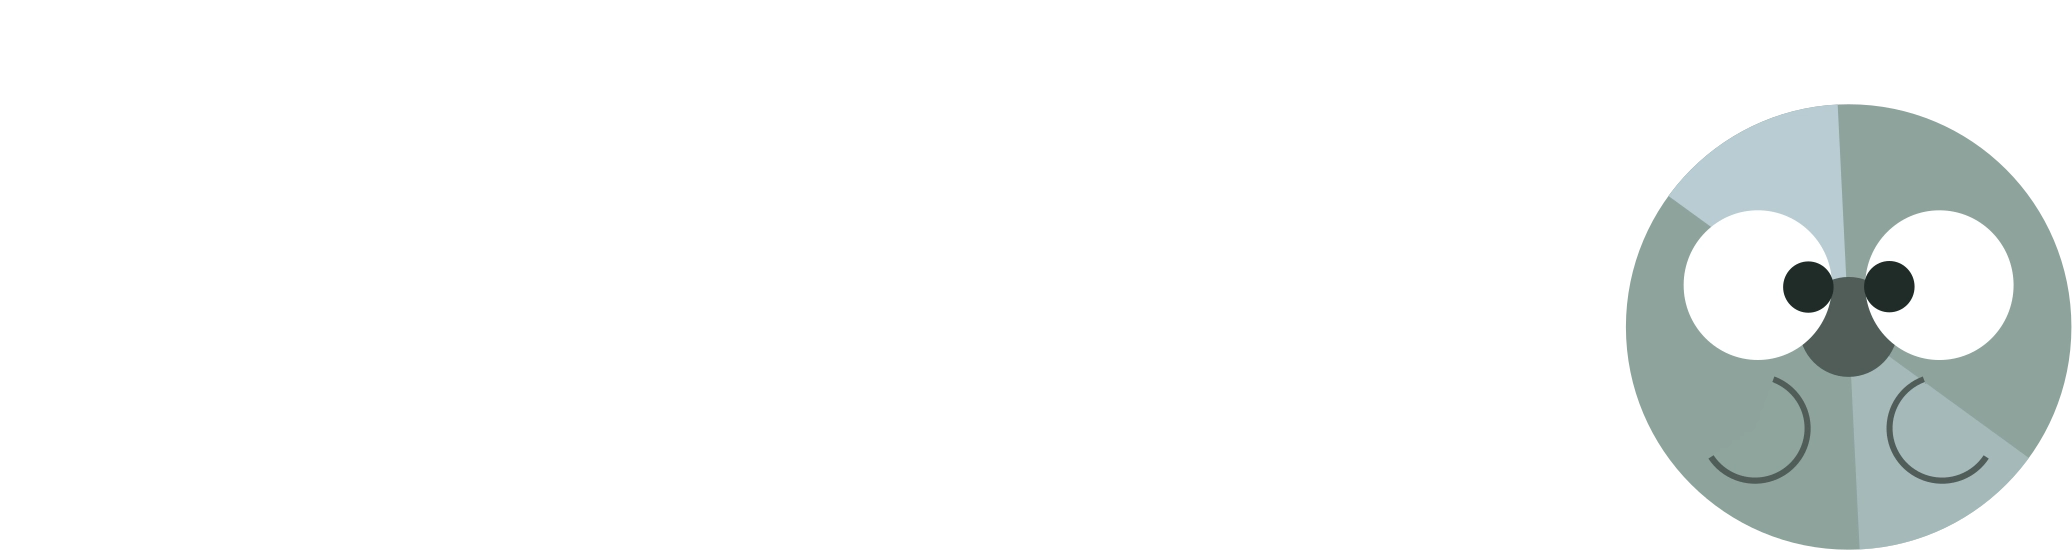 FamicomCD Logo